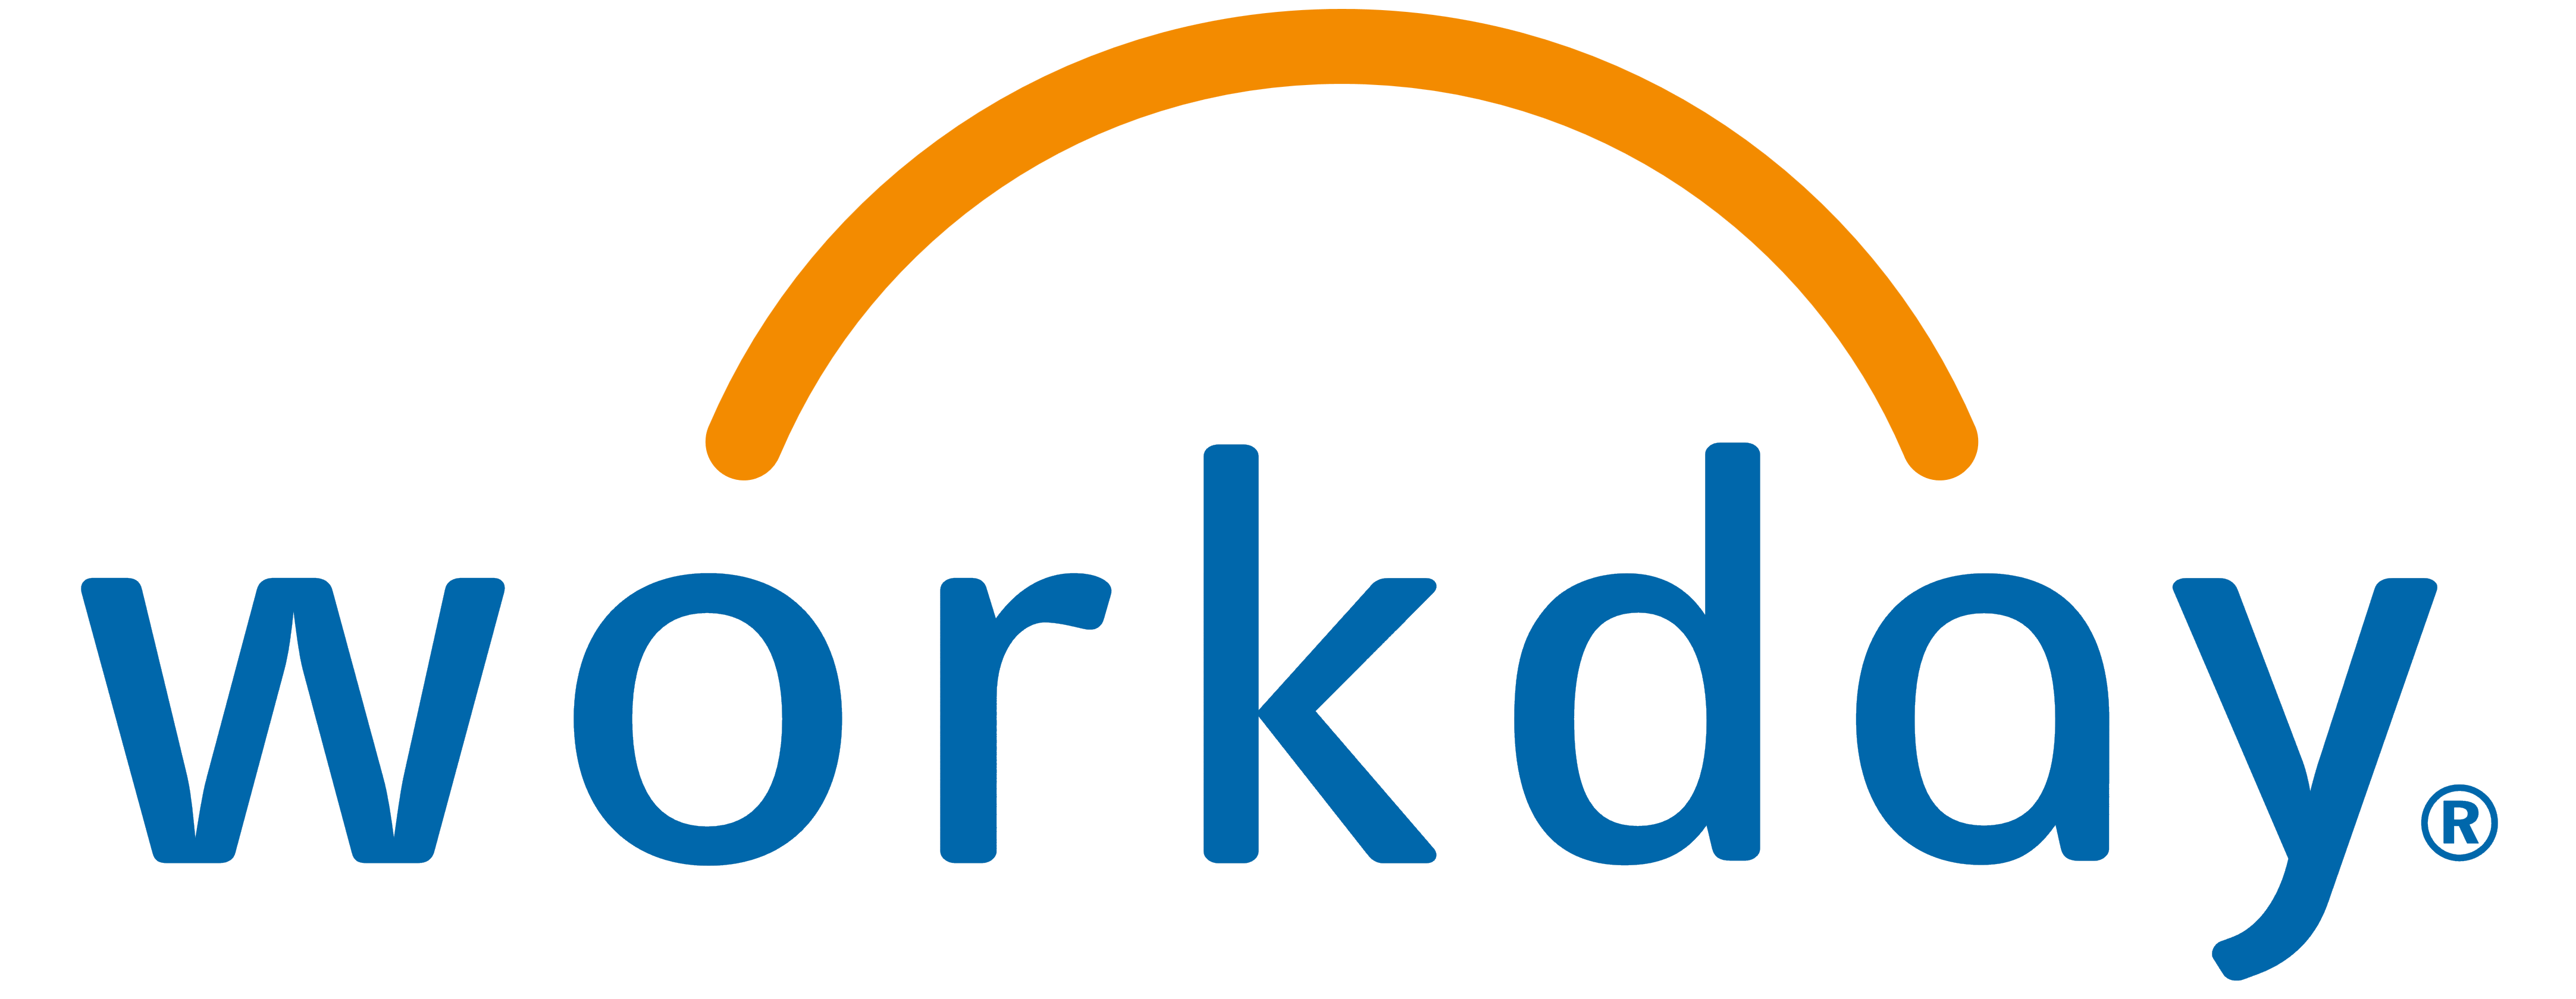 Workday integration logo